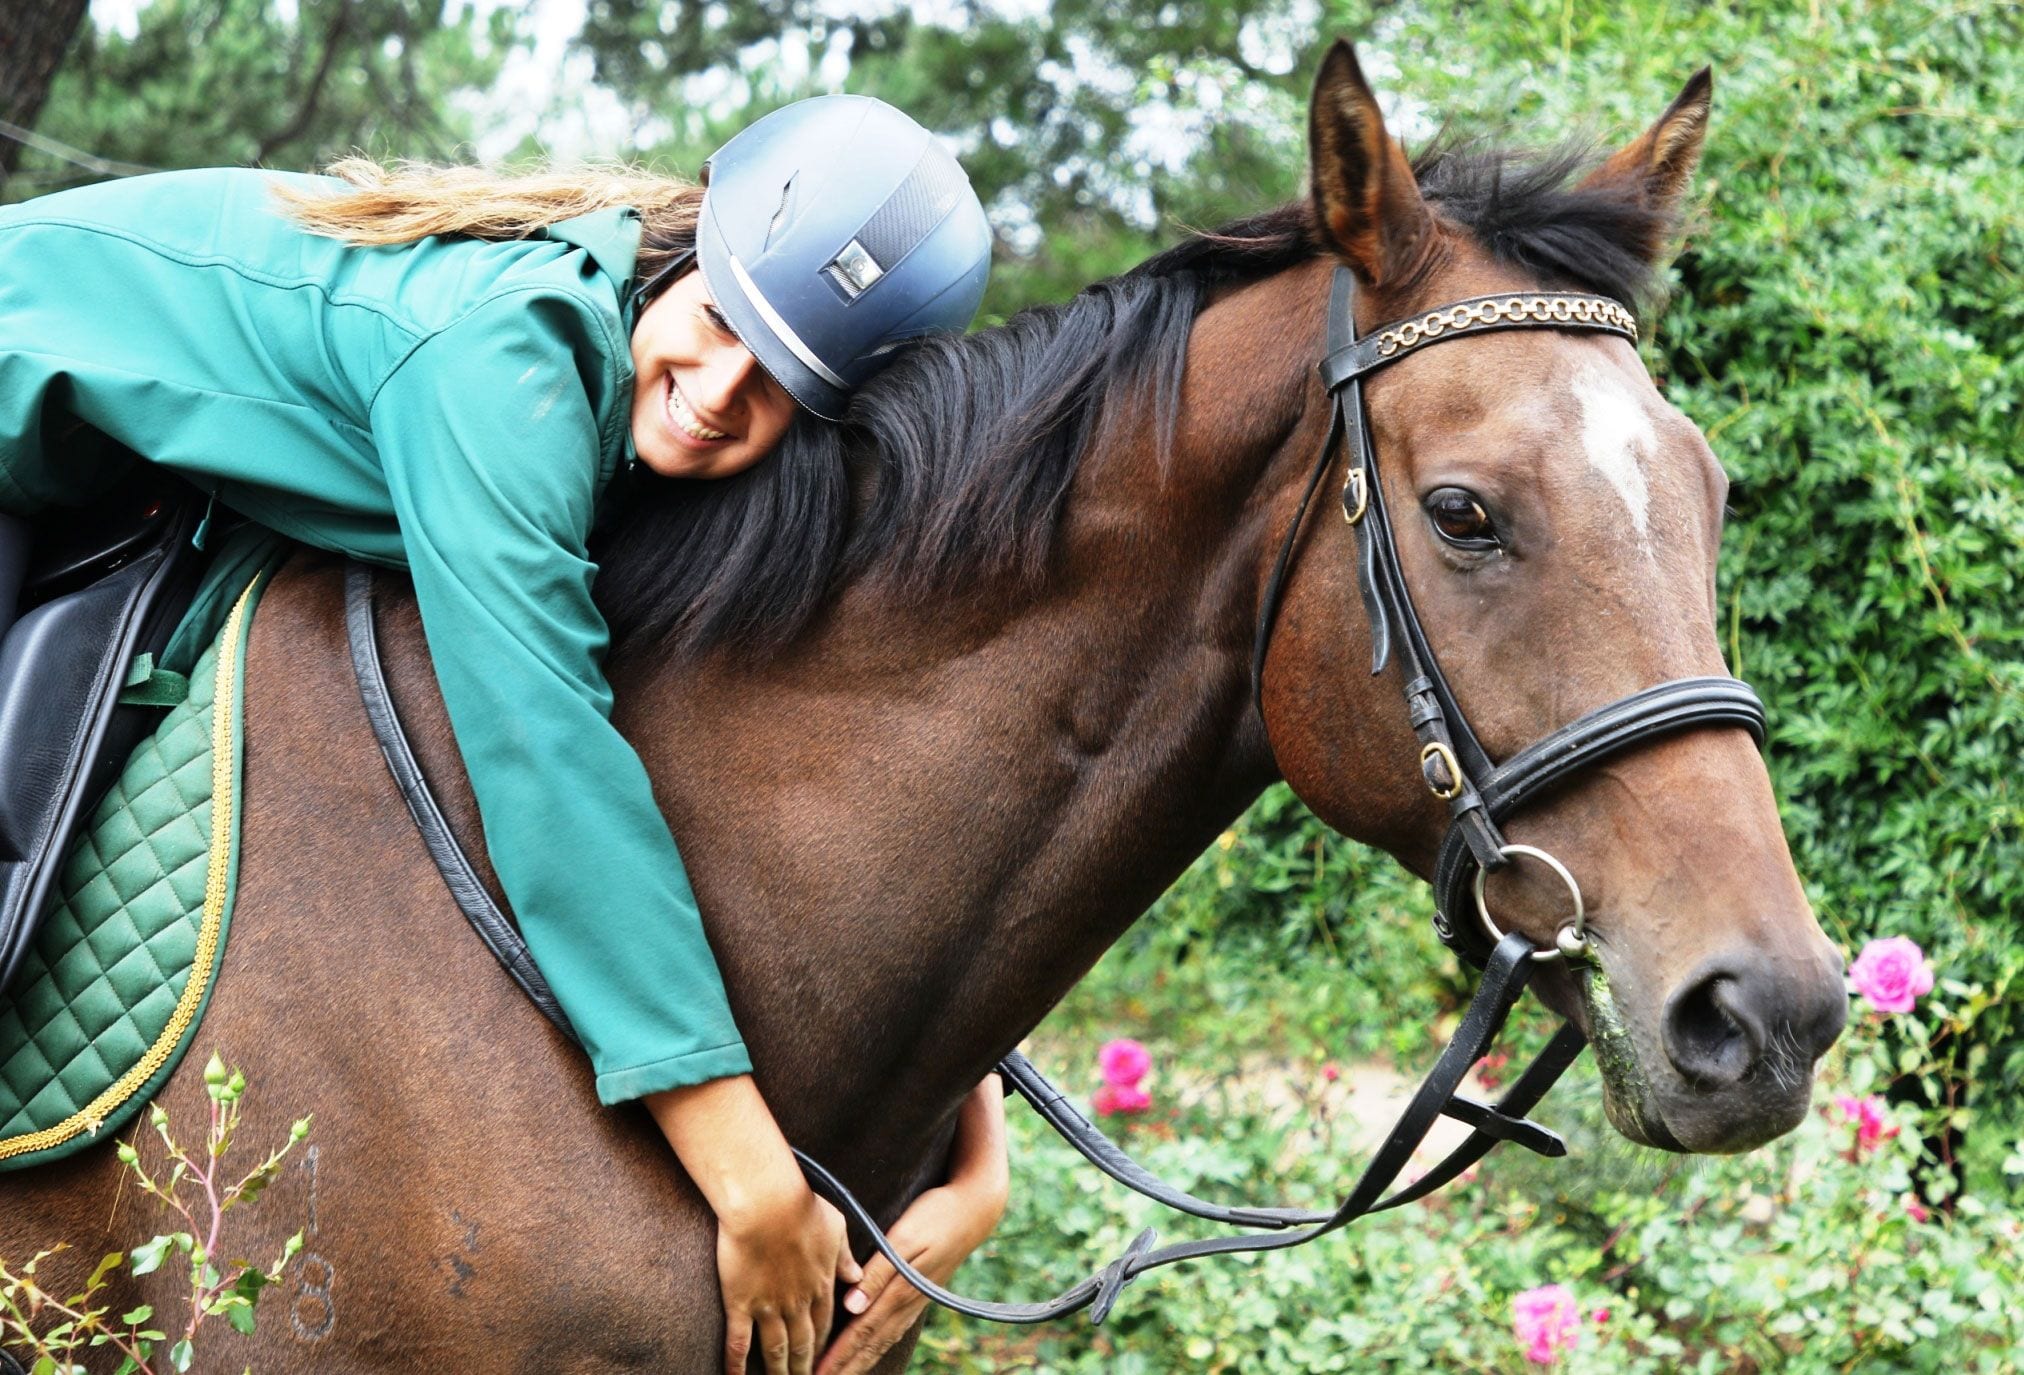 Super-Jockey-and-Shedi-in-the-woodlands-Gardens-@livinglegendsAUlovethehorse